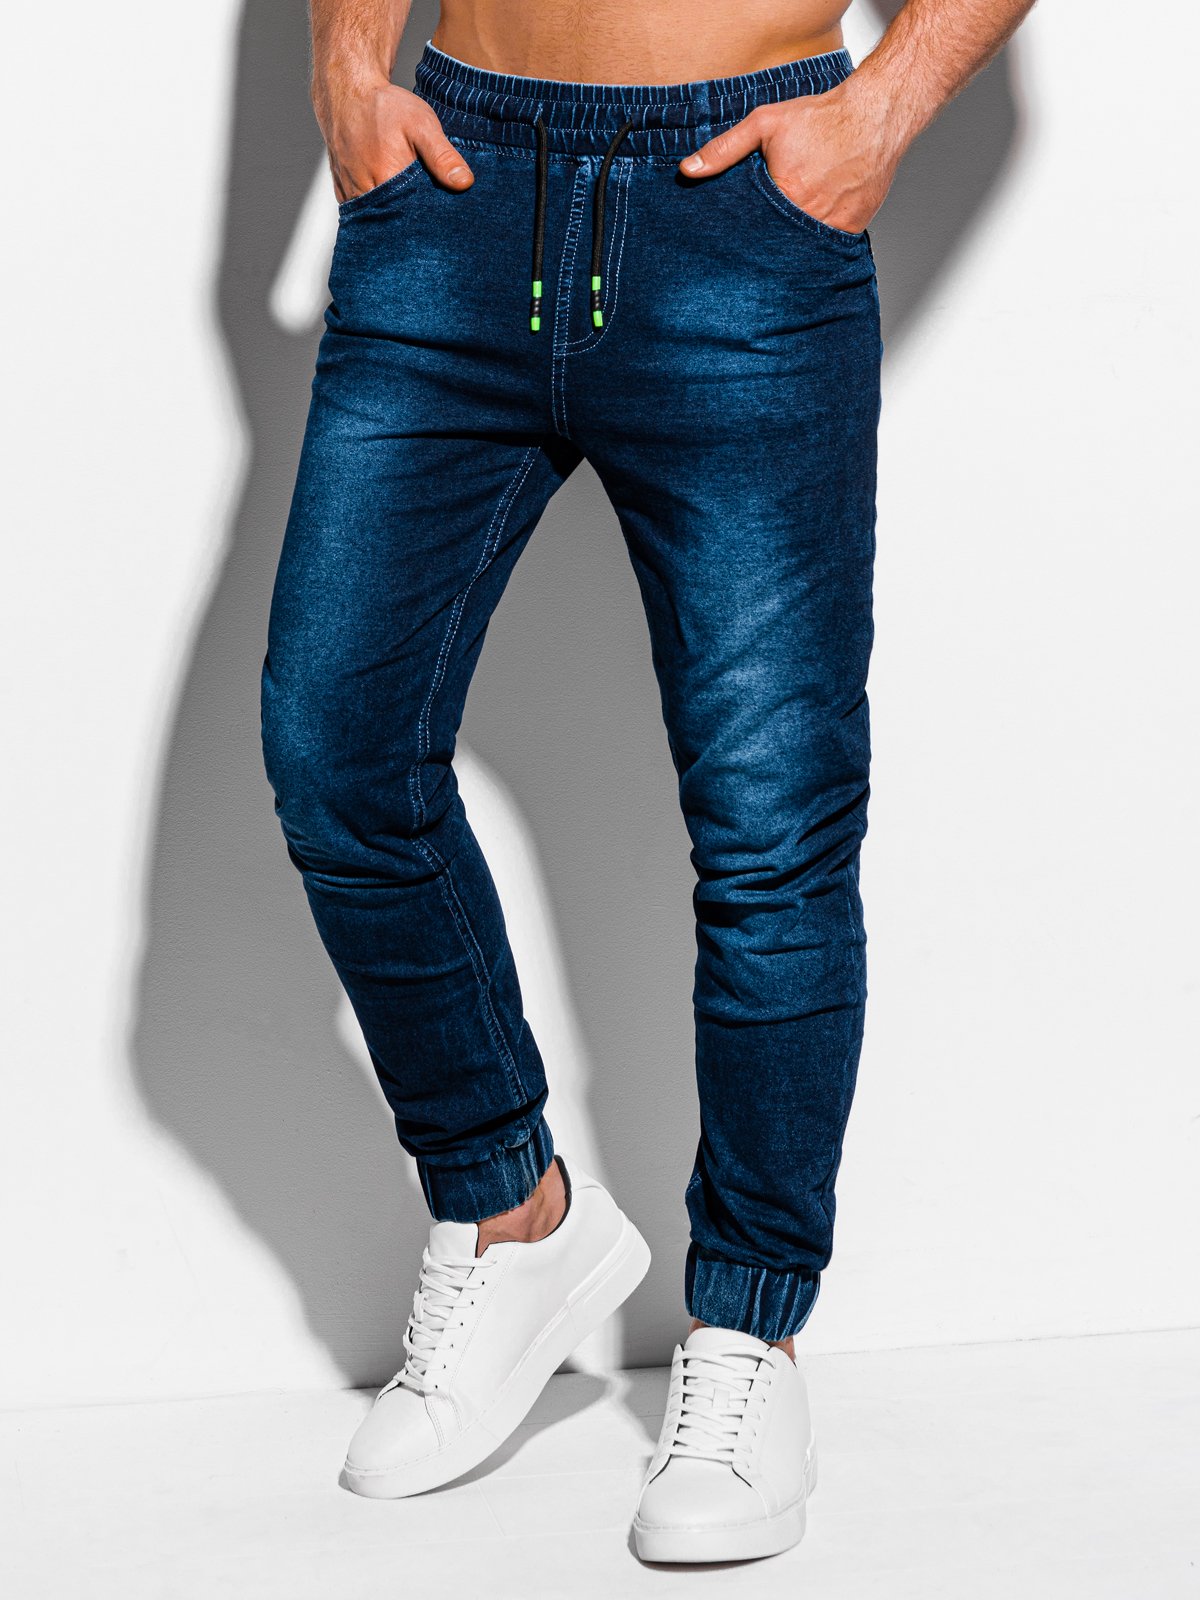 Men's jeans joggers P964 - dark blue | MODONE wholesale - Clothing For Men